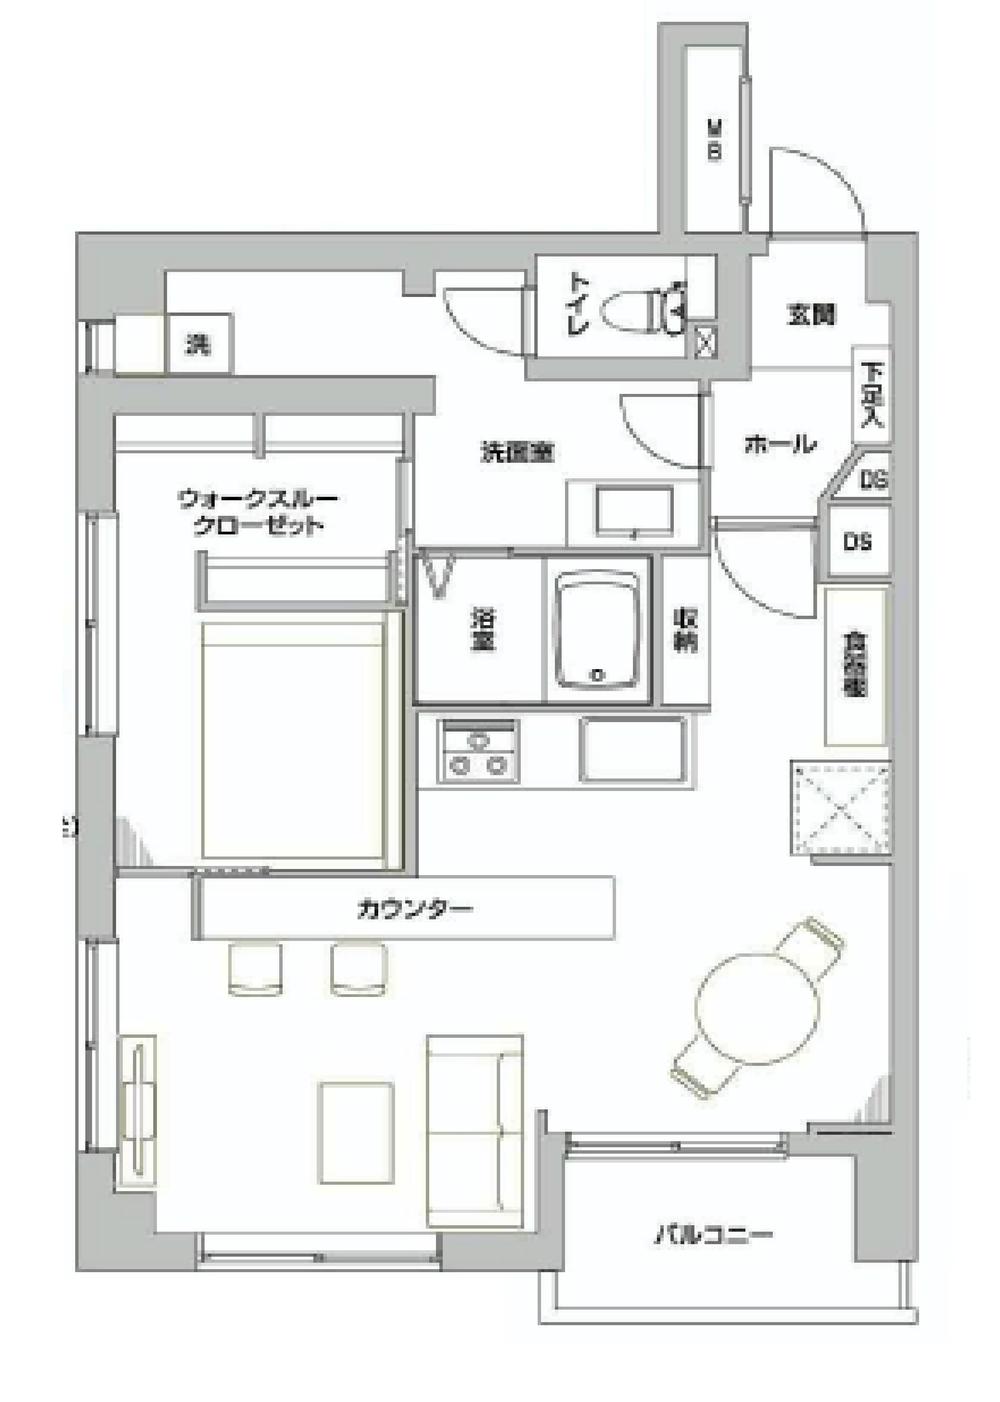 Floor plan. 1LDK + S (storeroom), Price 22,950,000 yen, Occupied area 50.85 sq m , Balcony area 4.5 sq m